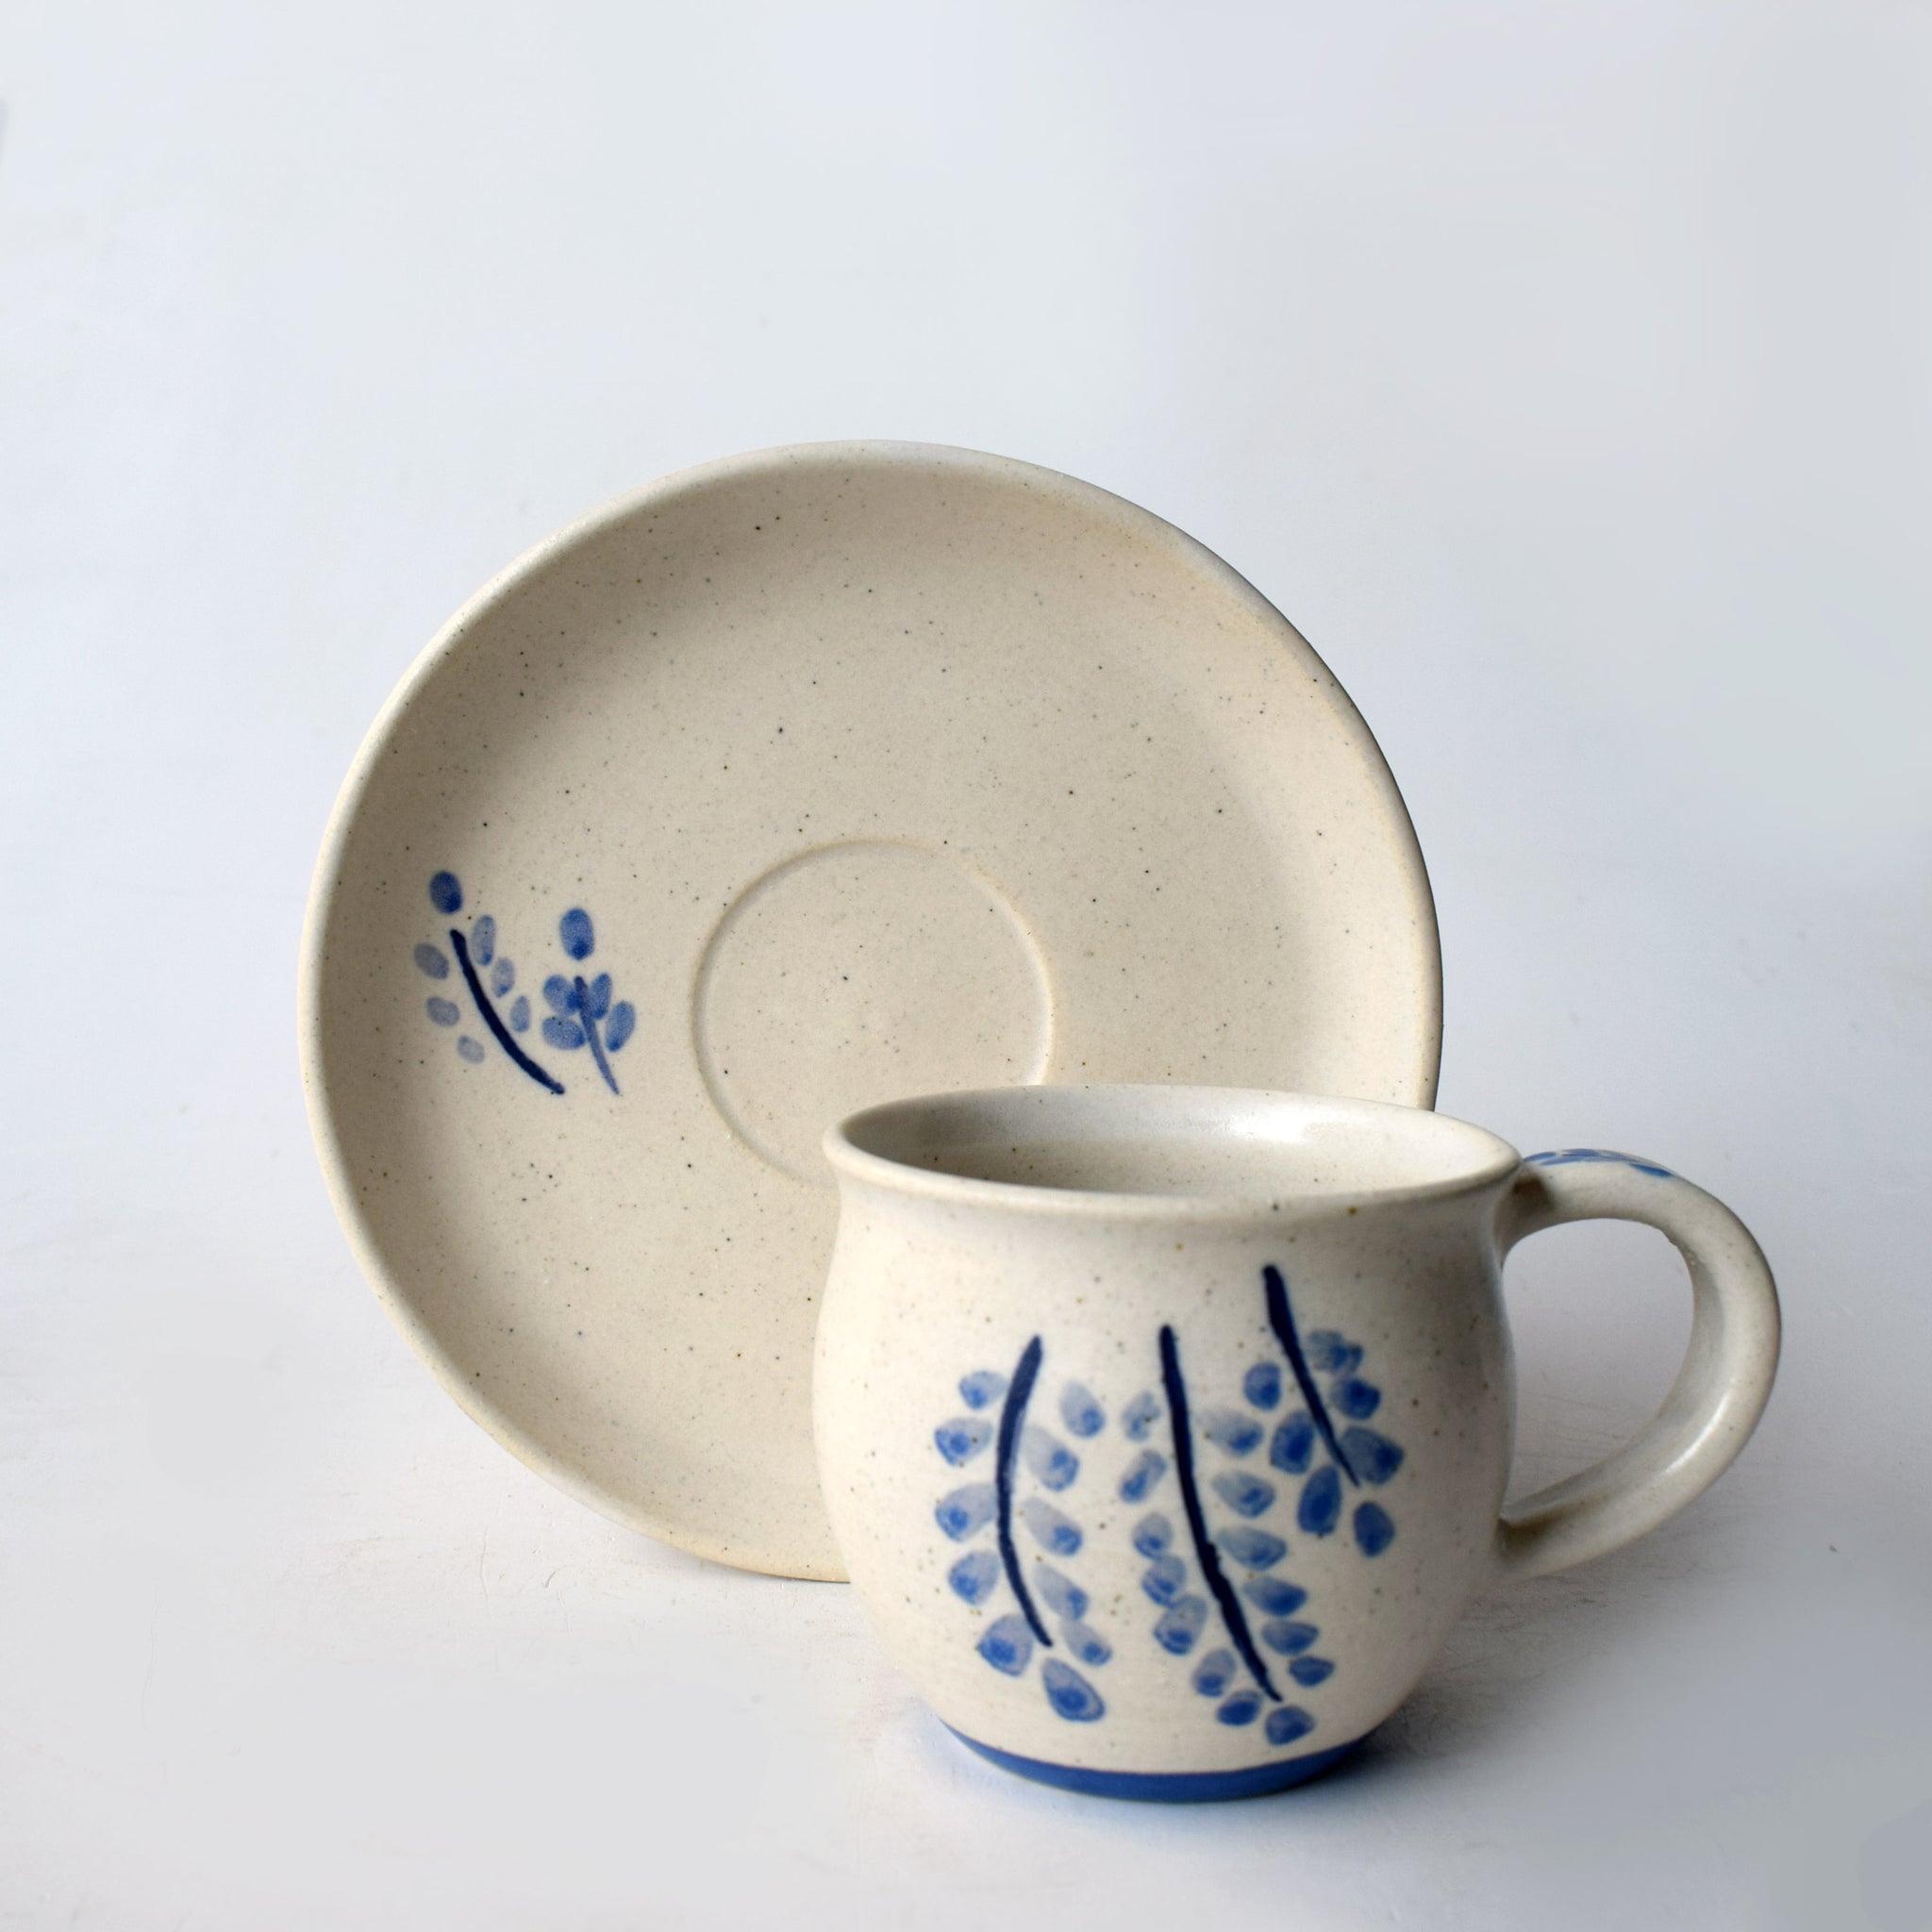 Hand-painted Tea Cup & Saucer Set